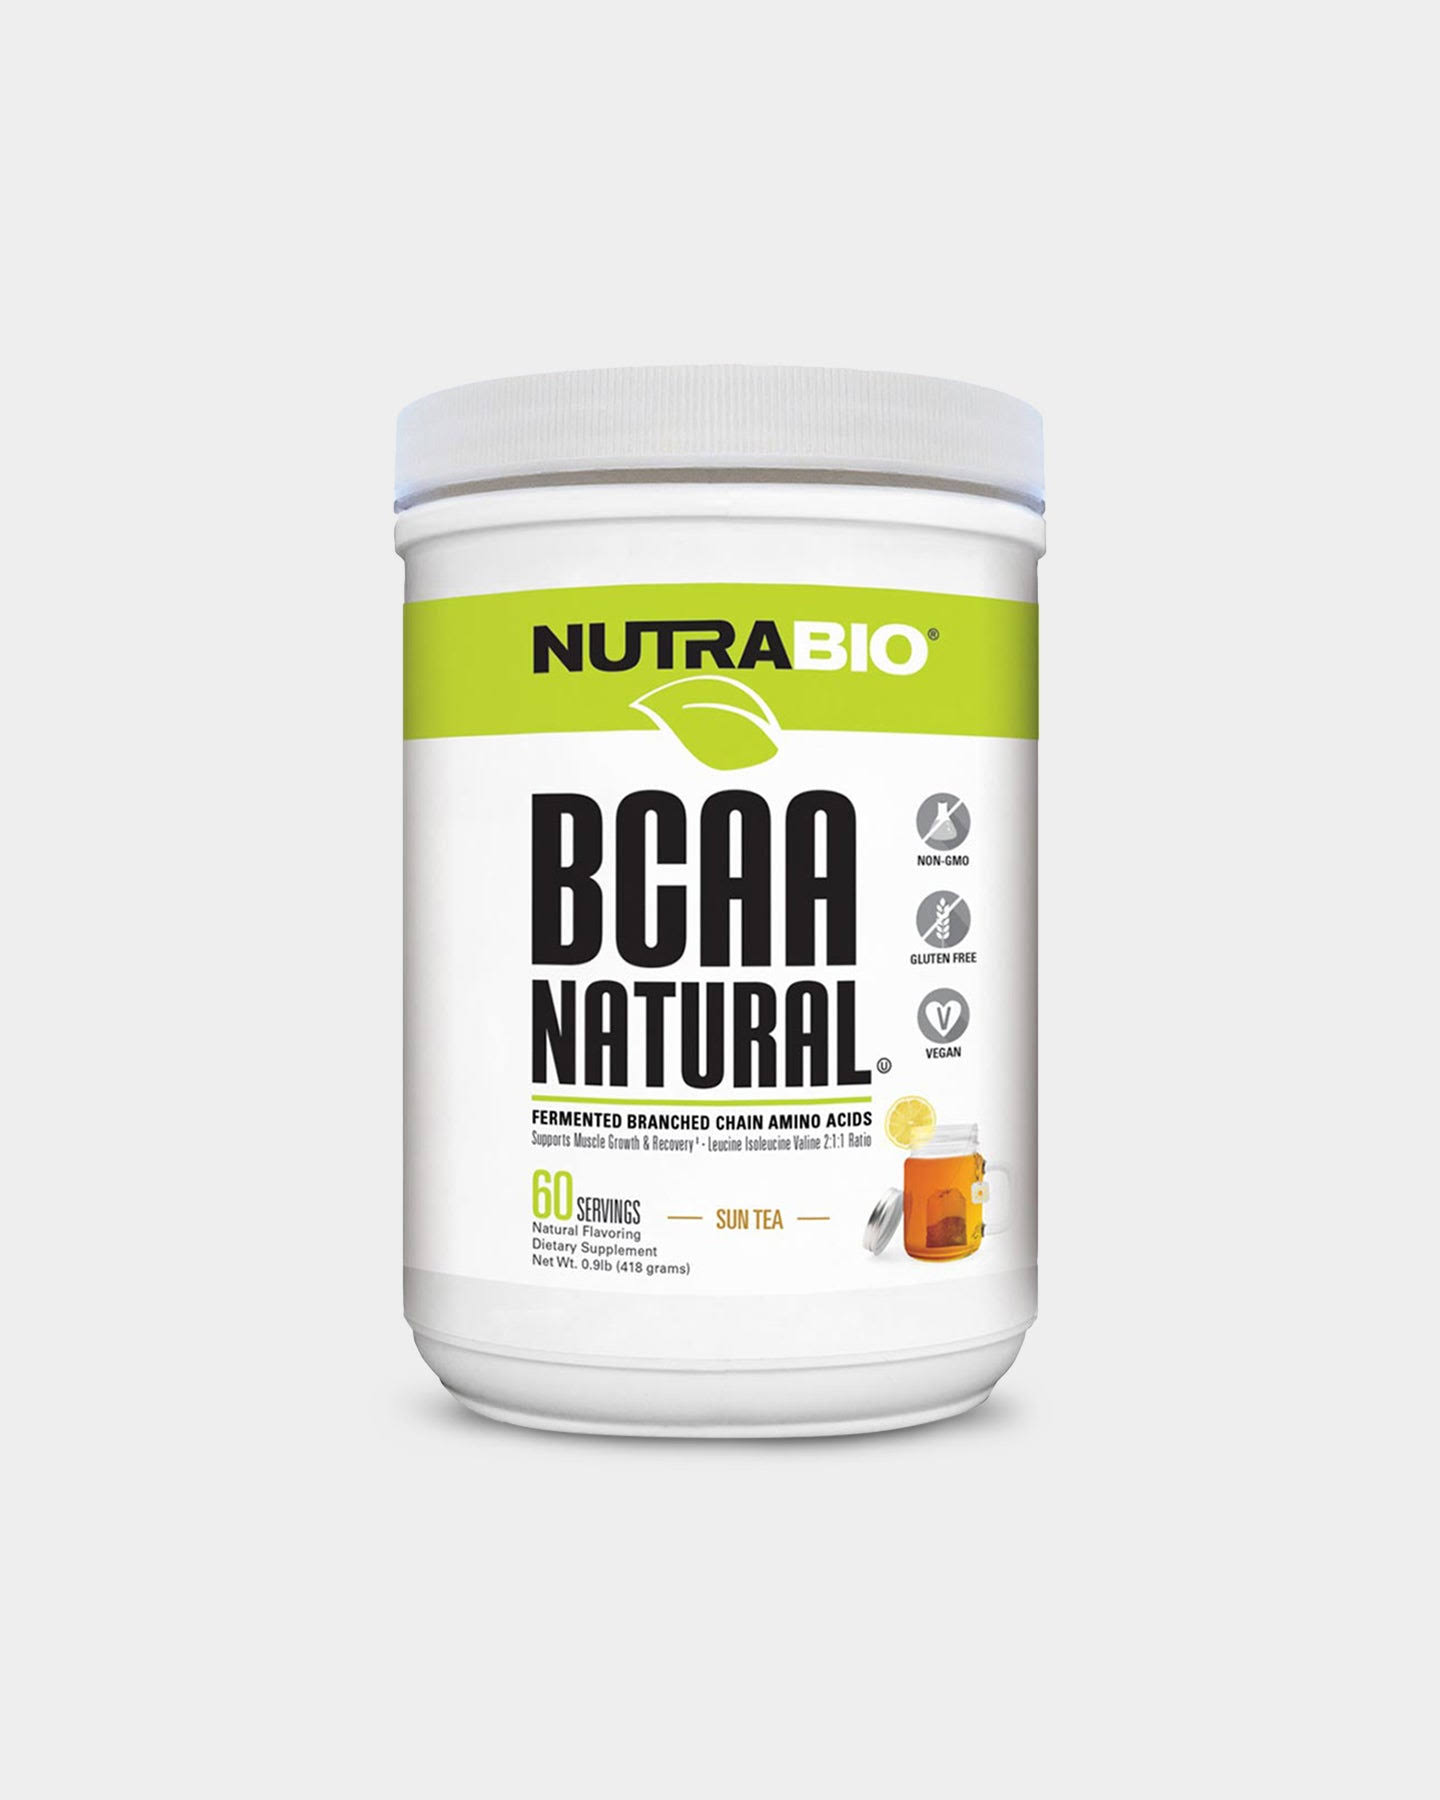 NutraBio BCAA Natural | Amino Acids & BCAAs | 60 Servings - Sun Tea